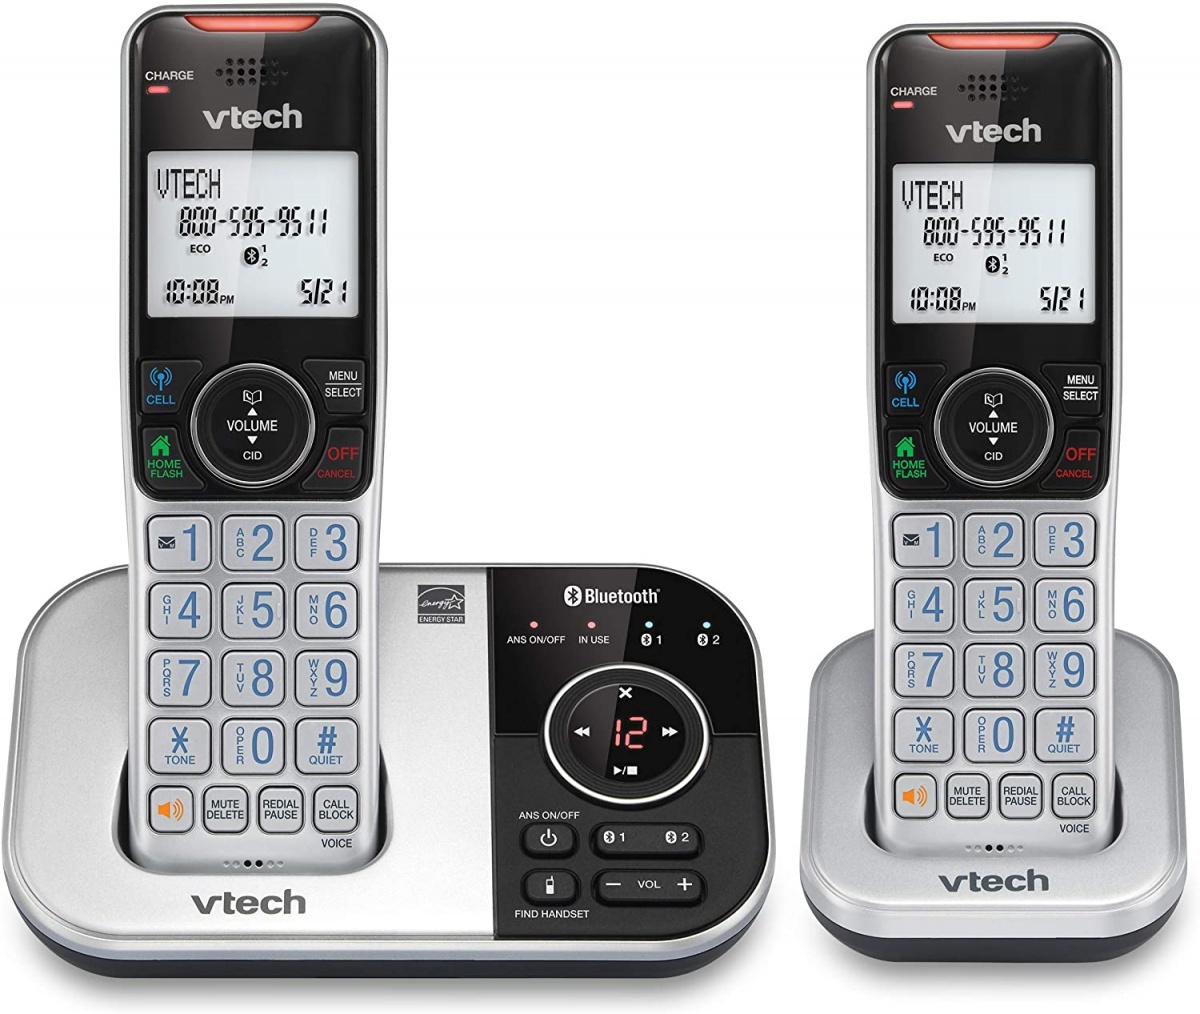 vtech vs112-2 cordless phone review